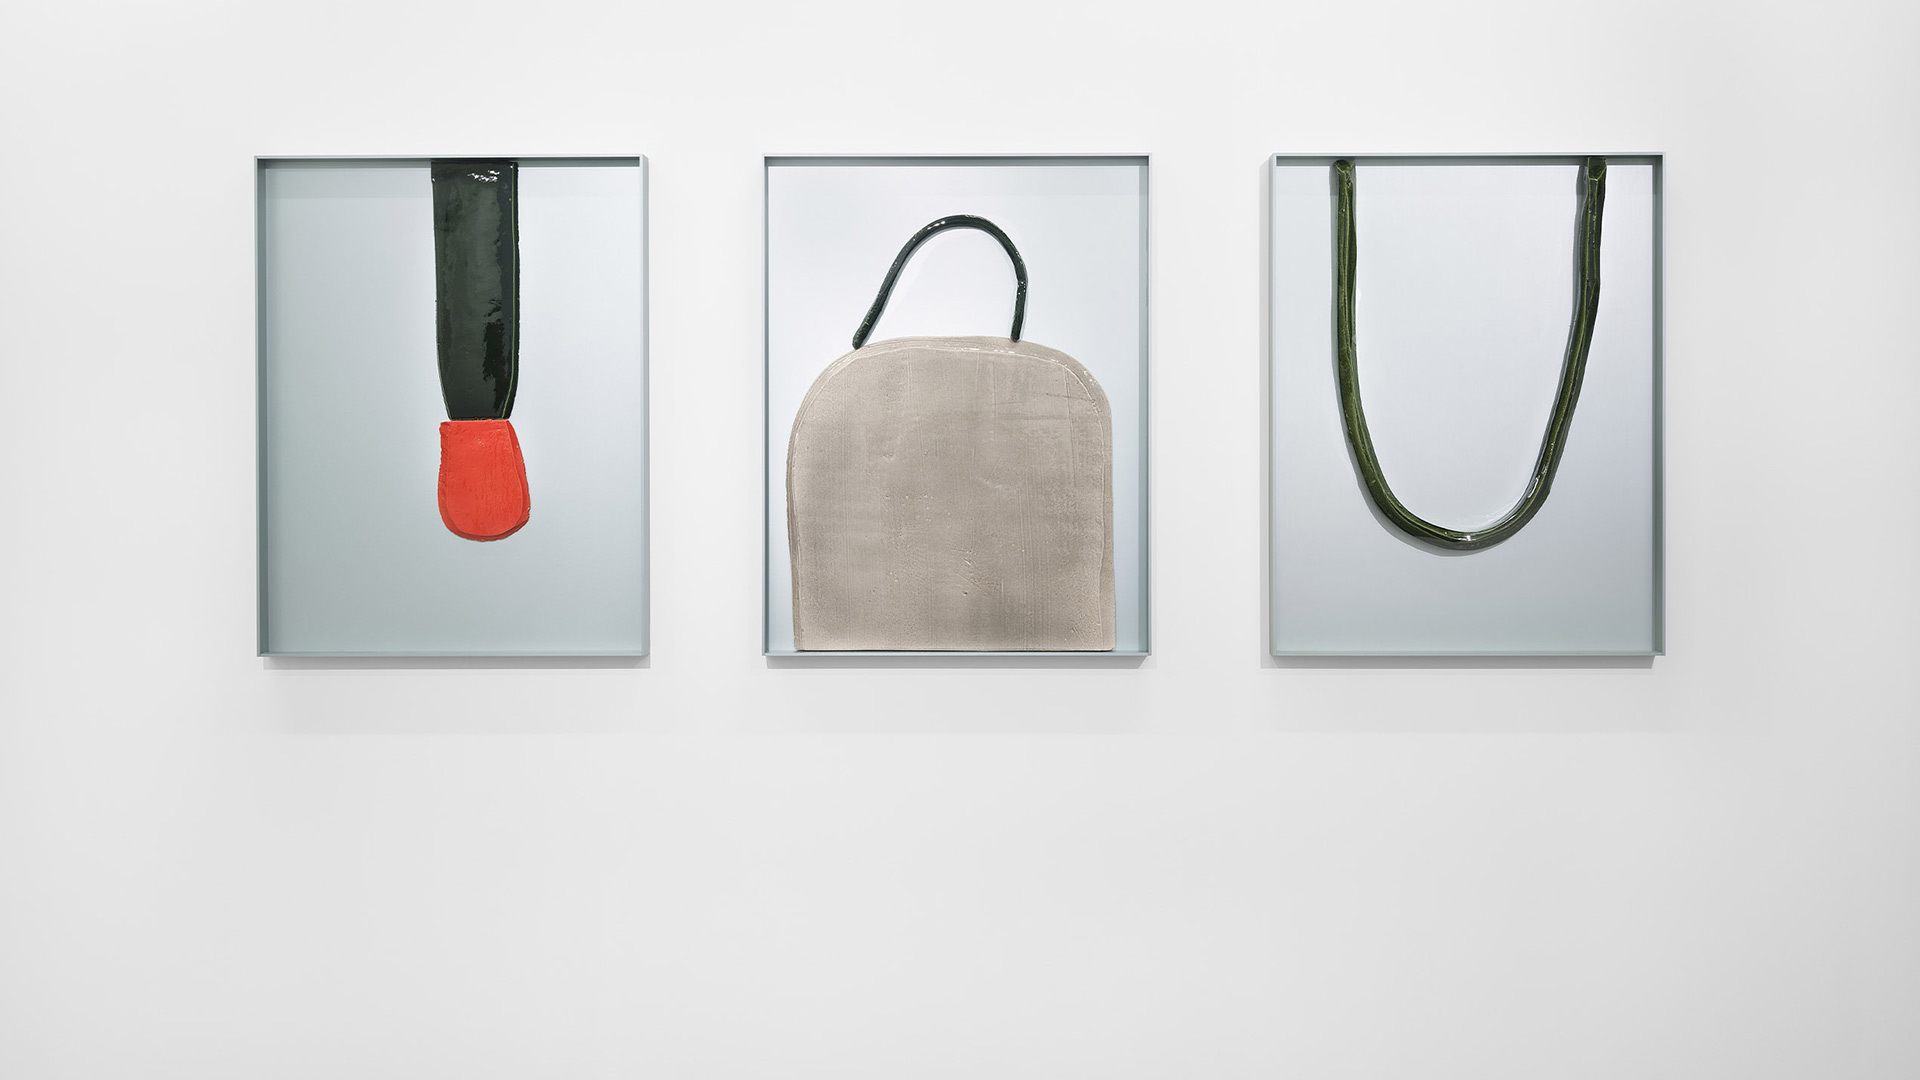 Ronan Bouroullec presents geometric-asymmetric installations at Galerie kreo